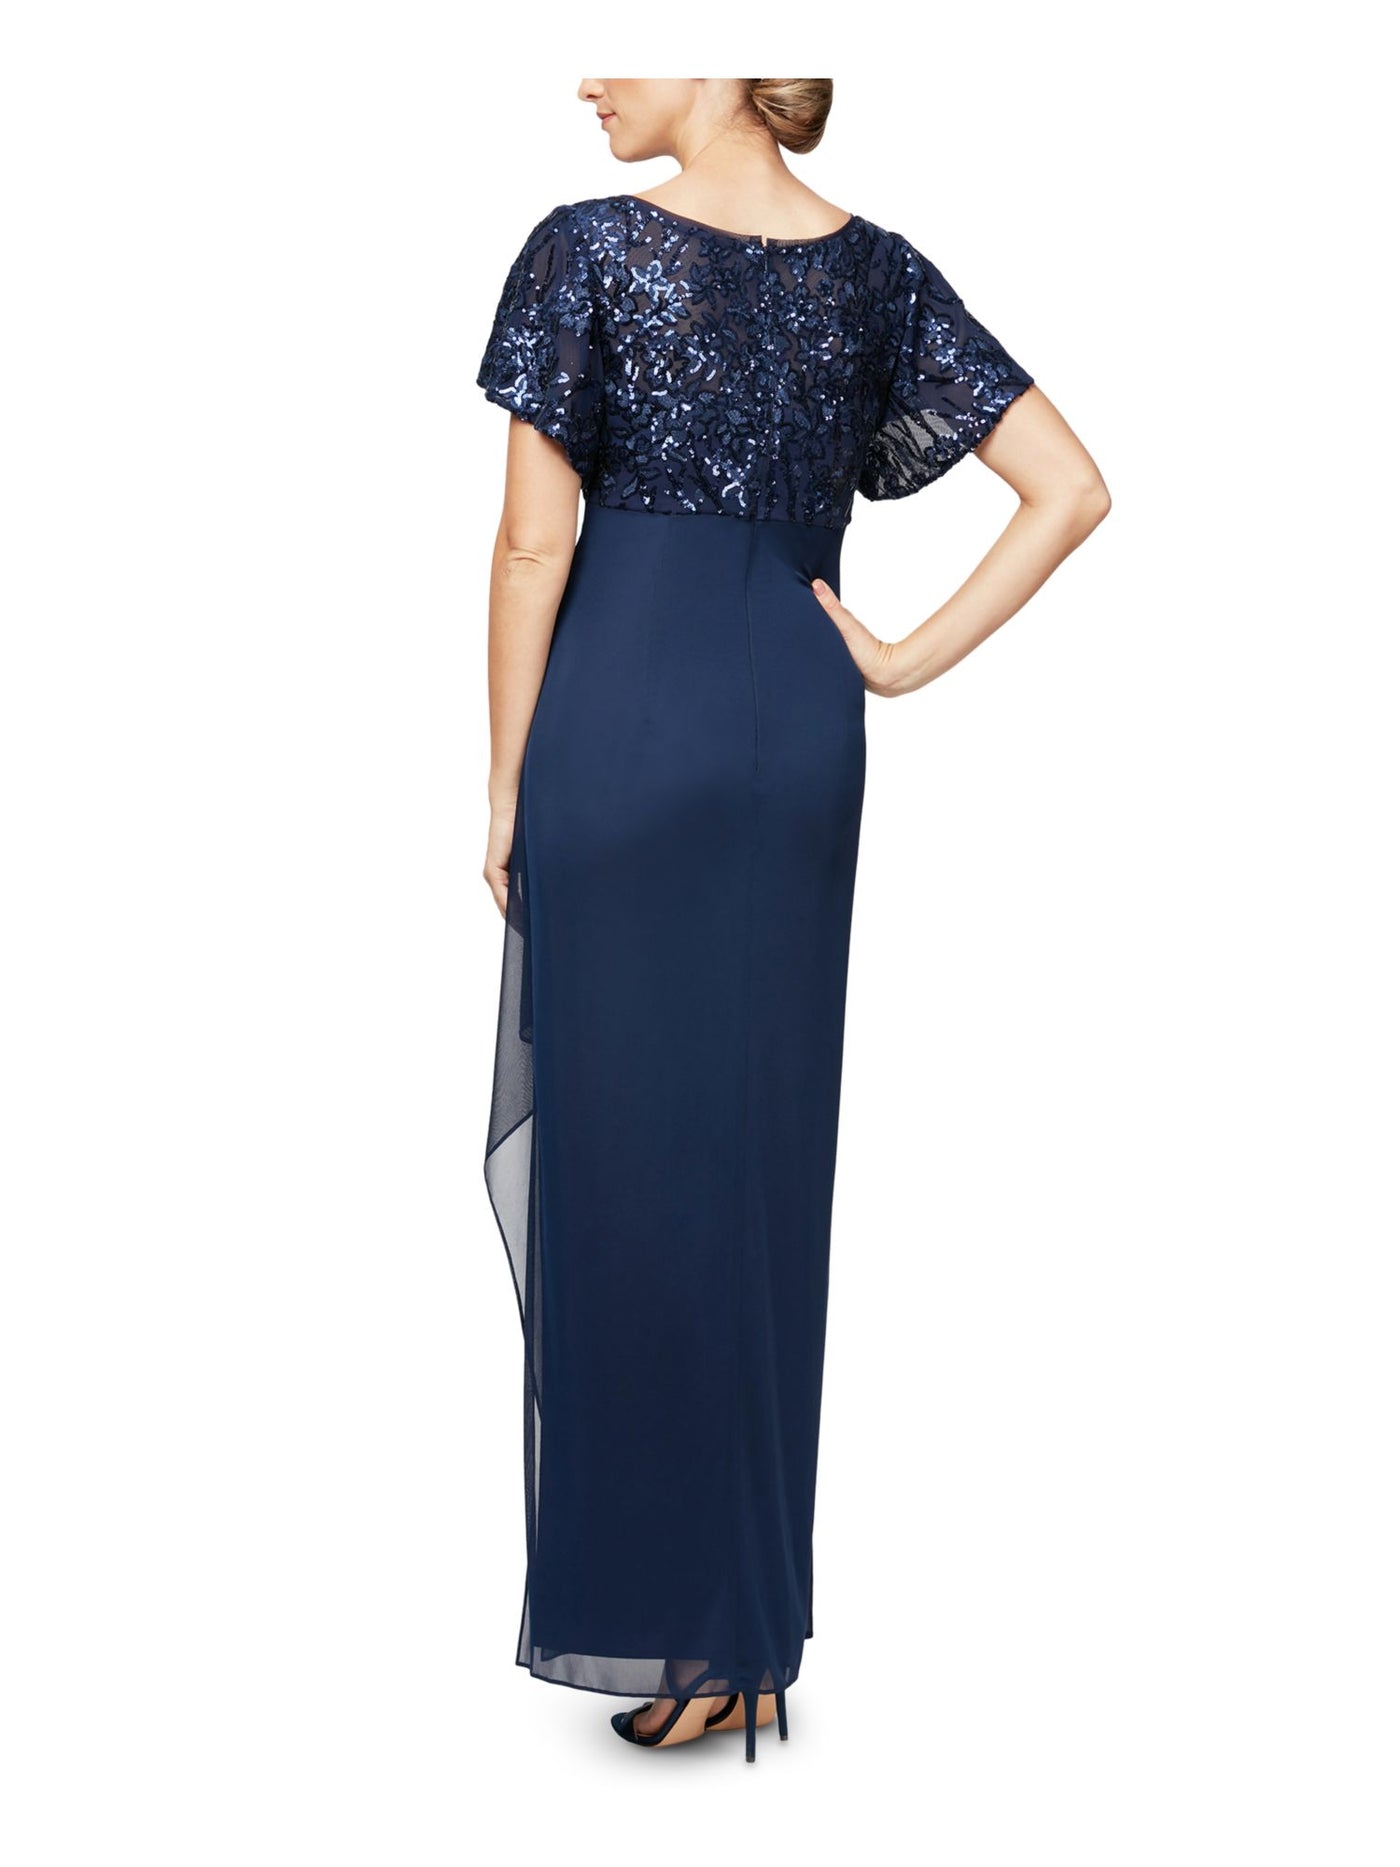 ALEX EVENINGS Womens Navy Ruched Embellished Lace Short Sleeve V Neck Full-Length Evening Empire Waist Dress Petites 6P